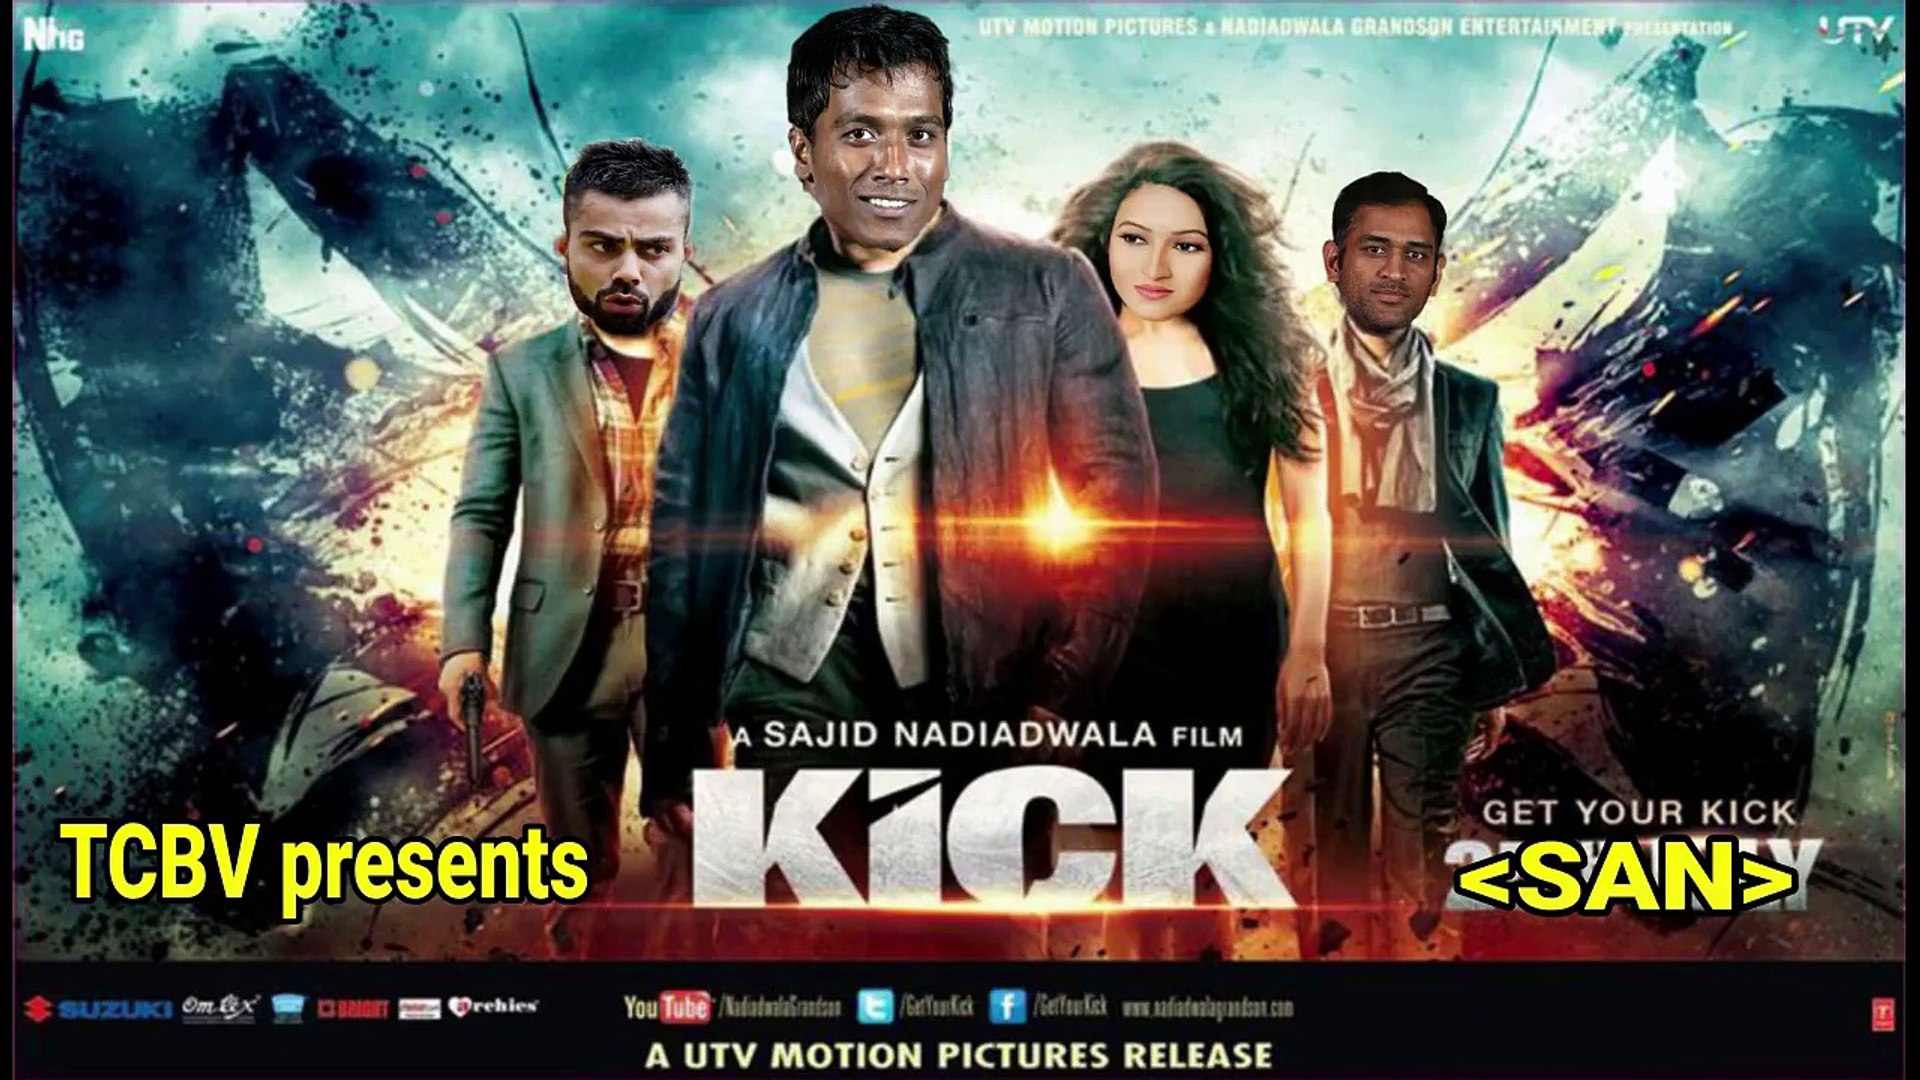 Kick Trailer Rubel vs Kohli Version - Cricket Parody Video - Troll Cricket - Bangladesh Version